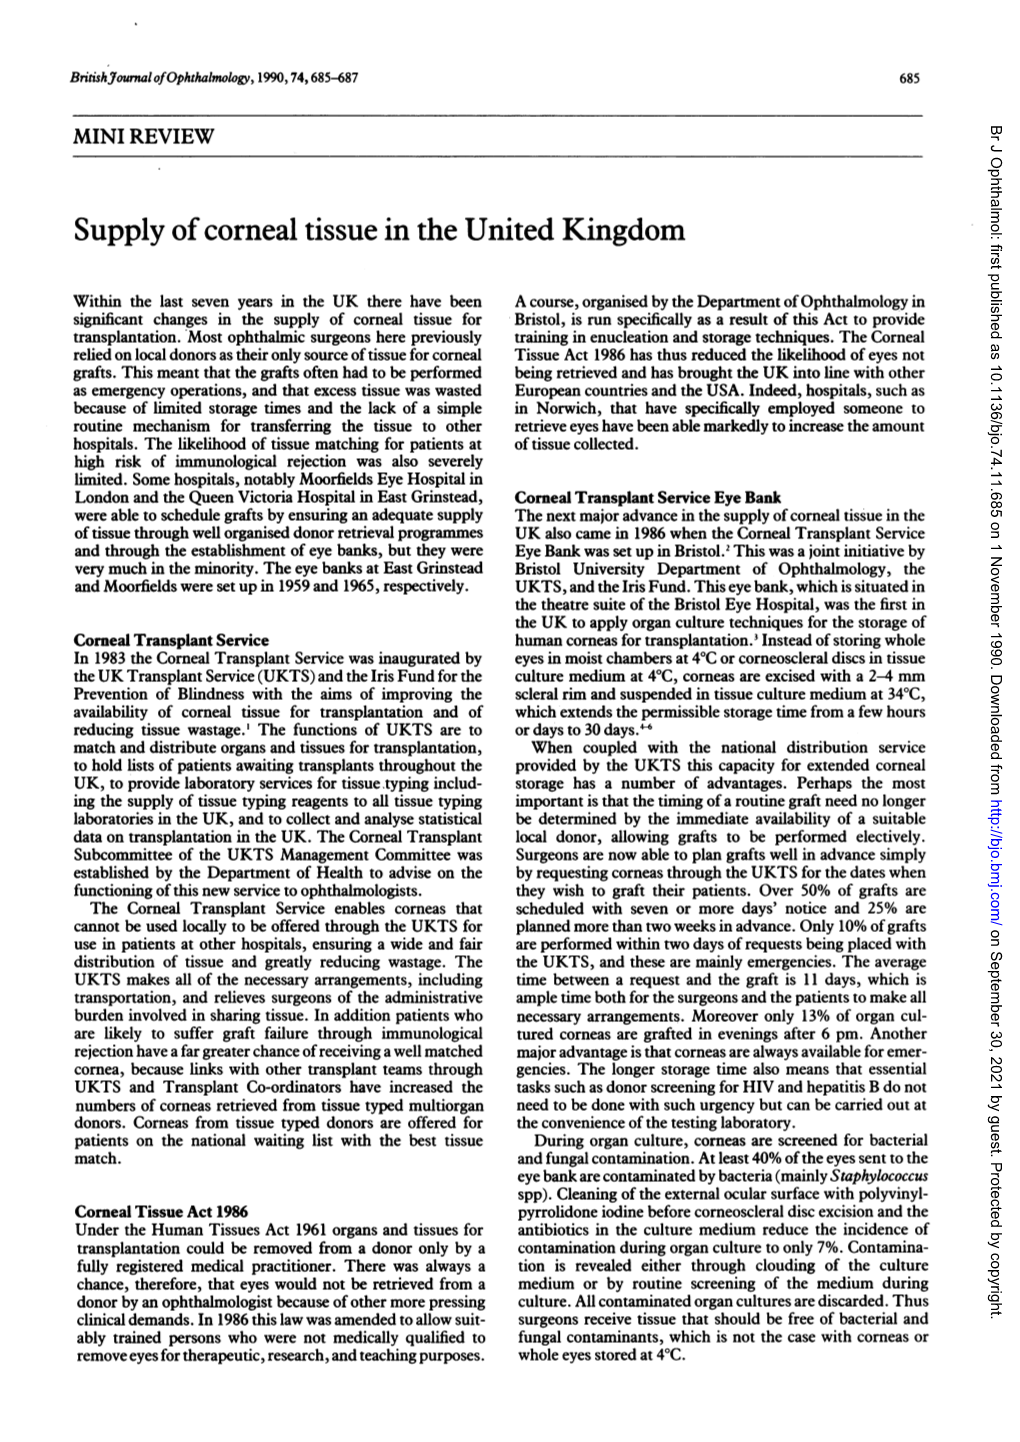 Supply Ofcorneal Tissue in the United Kingdom